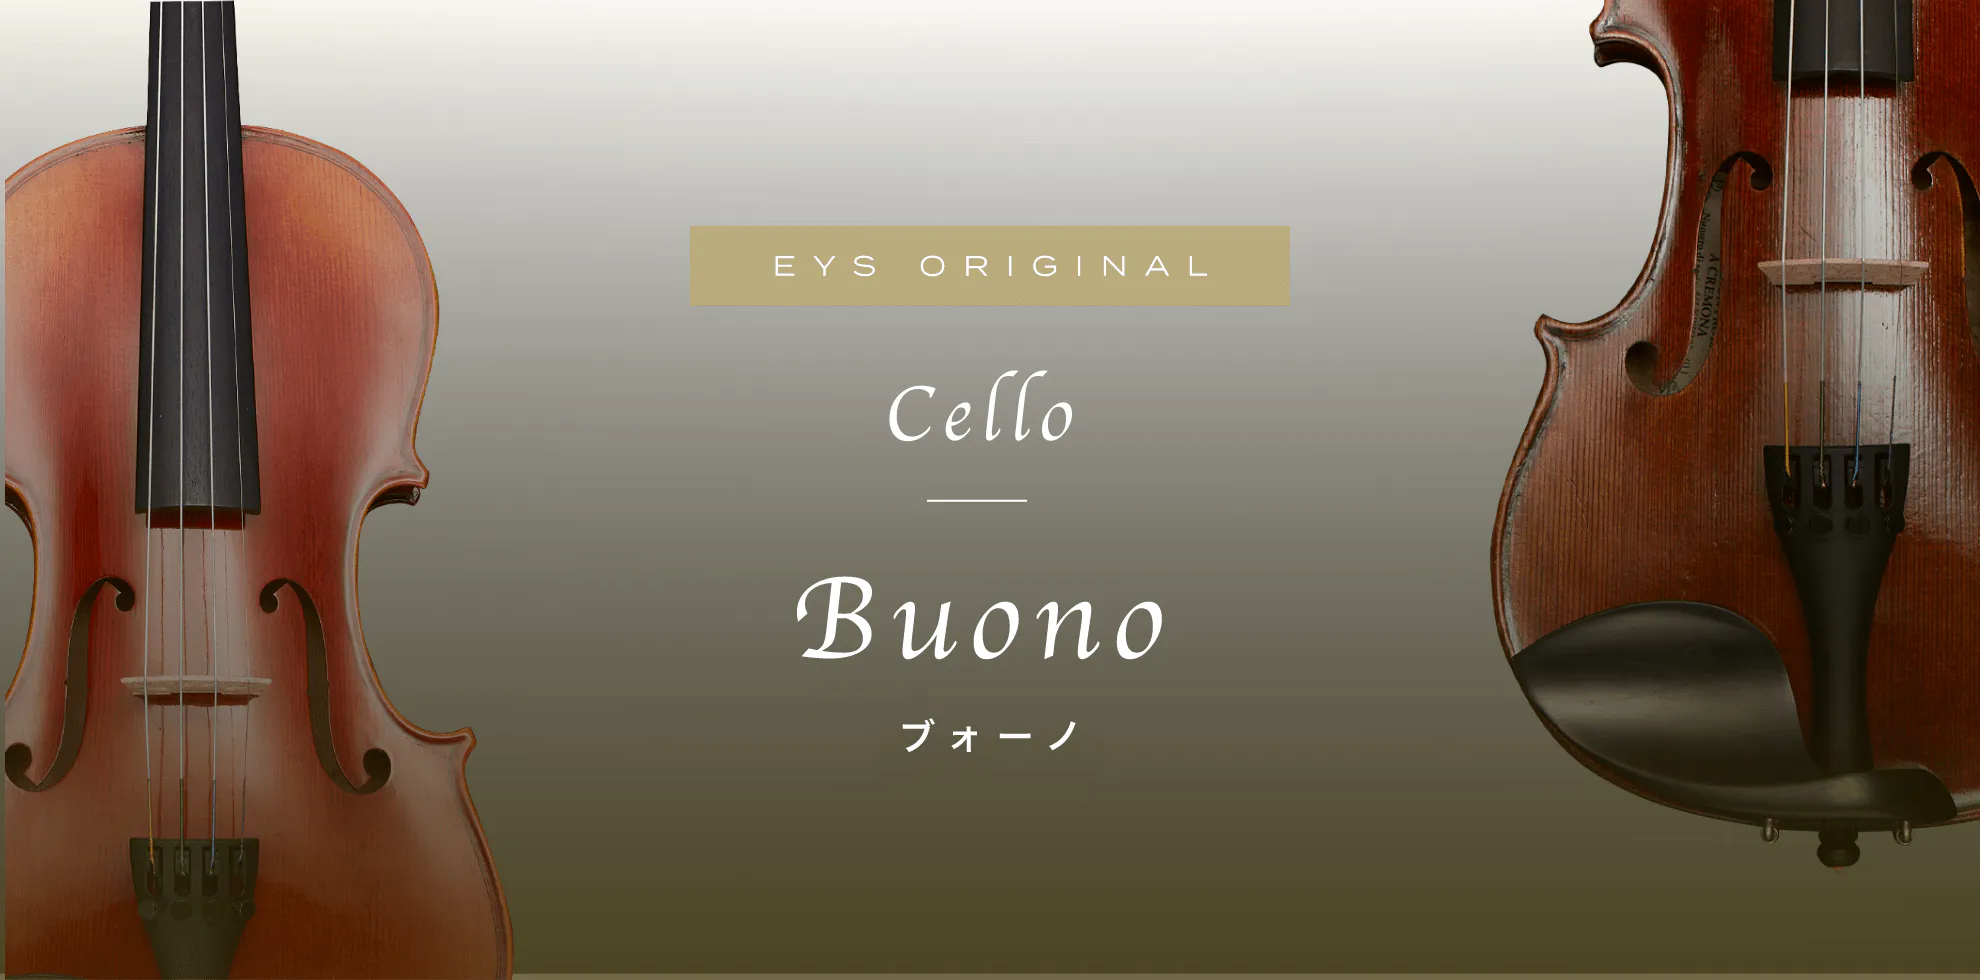 EYS ORIGINAL Cello Buono ブォーノ